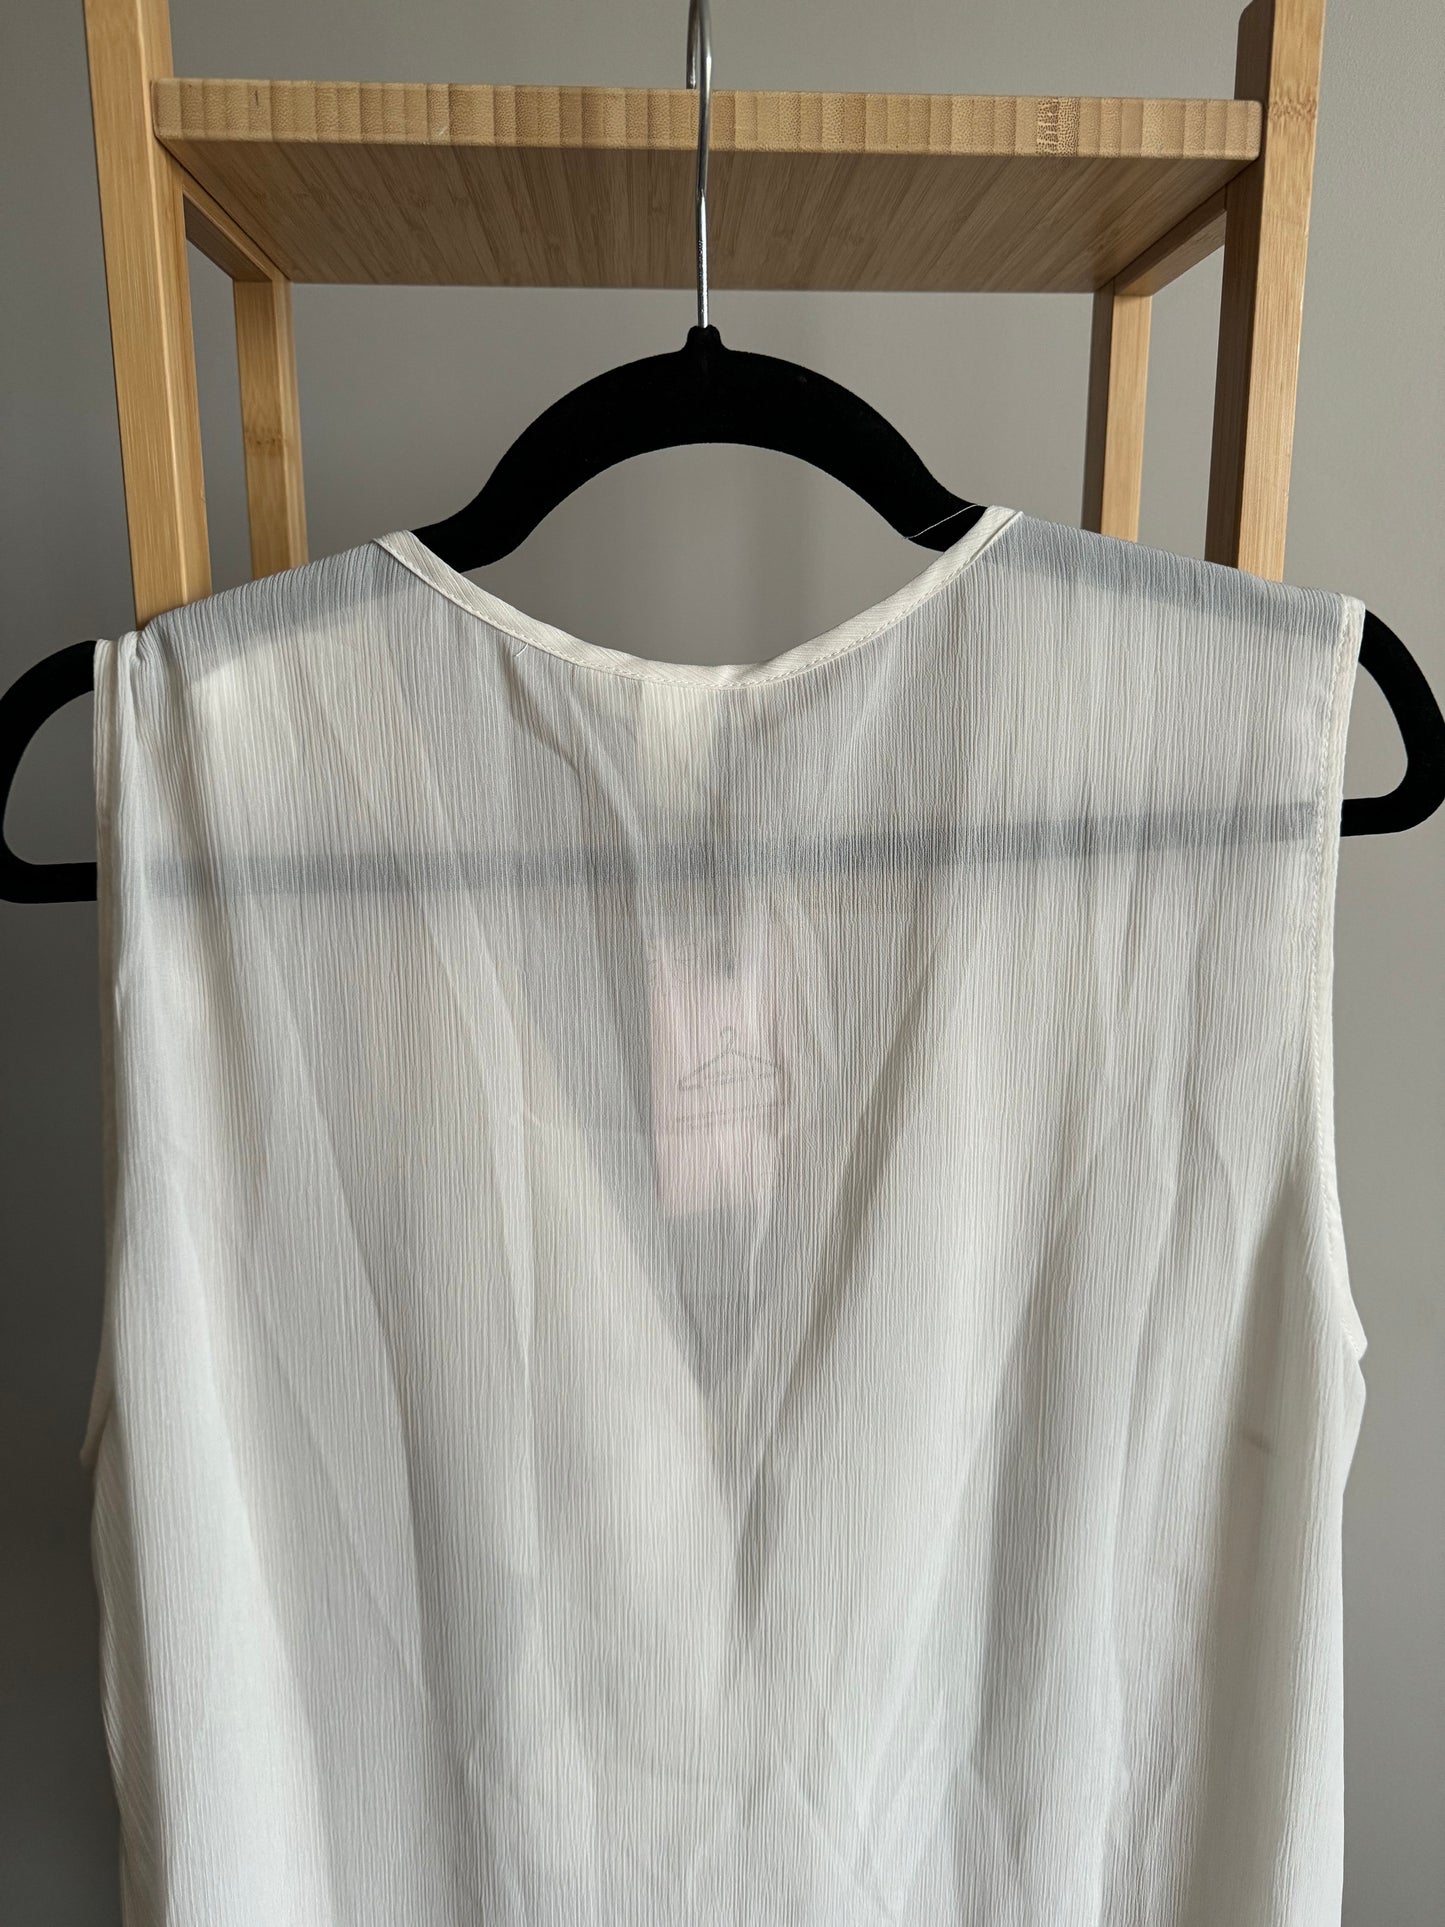 Top H&M blanc transparent Taille 46